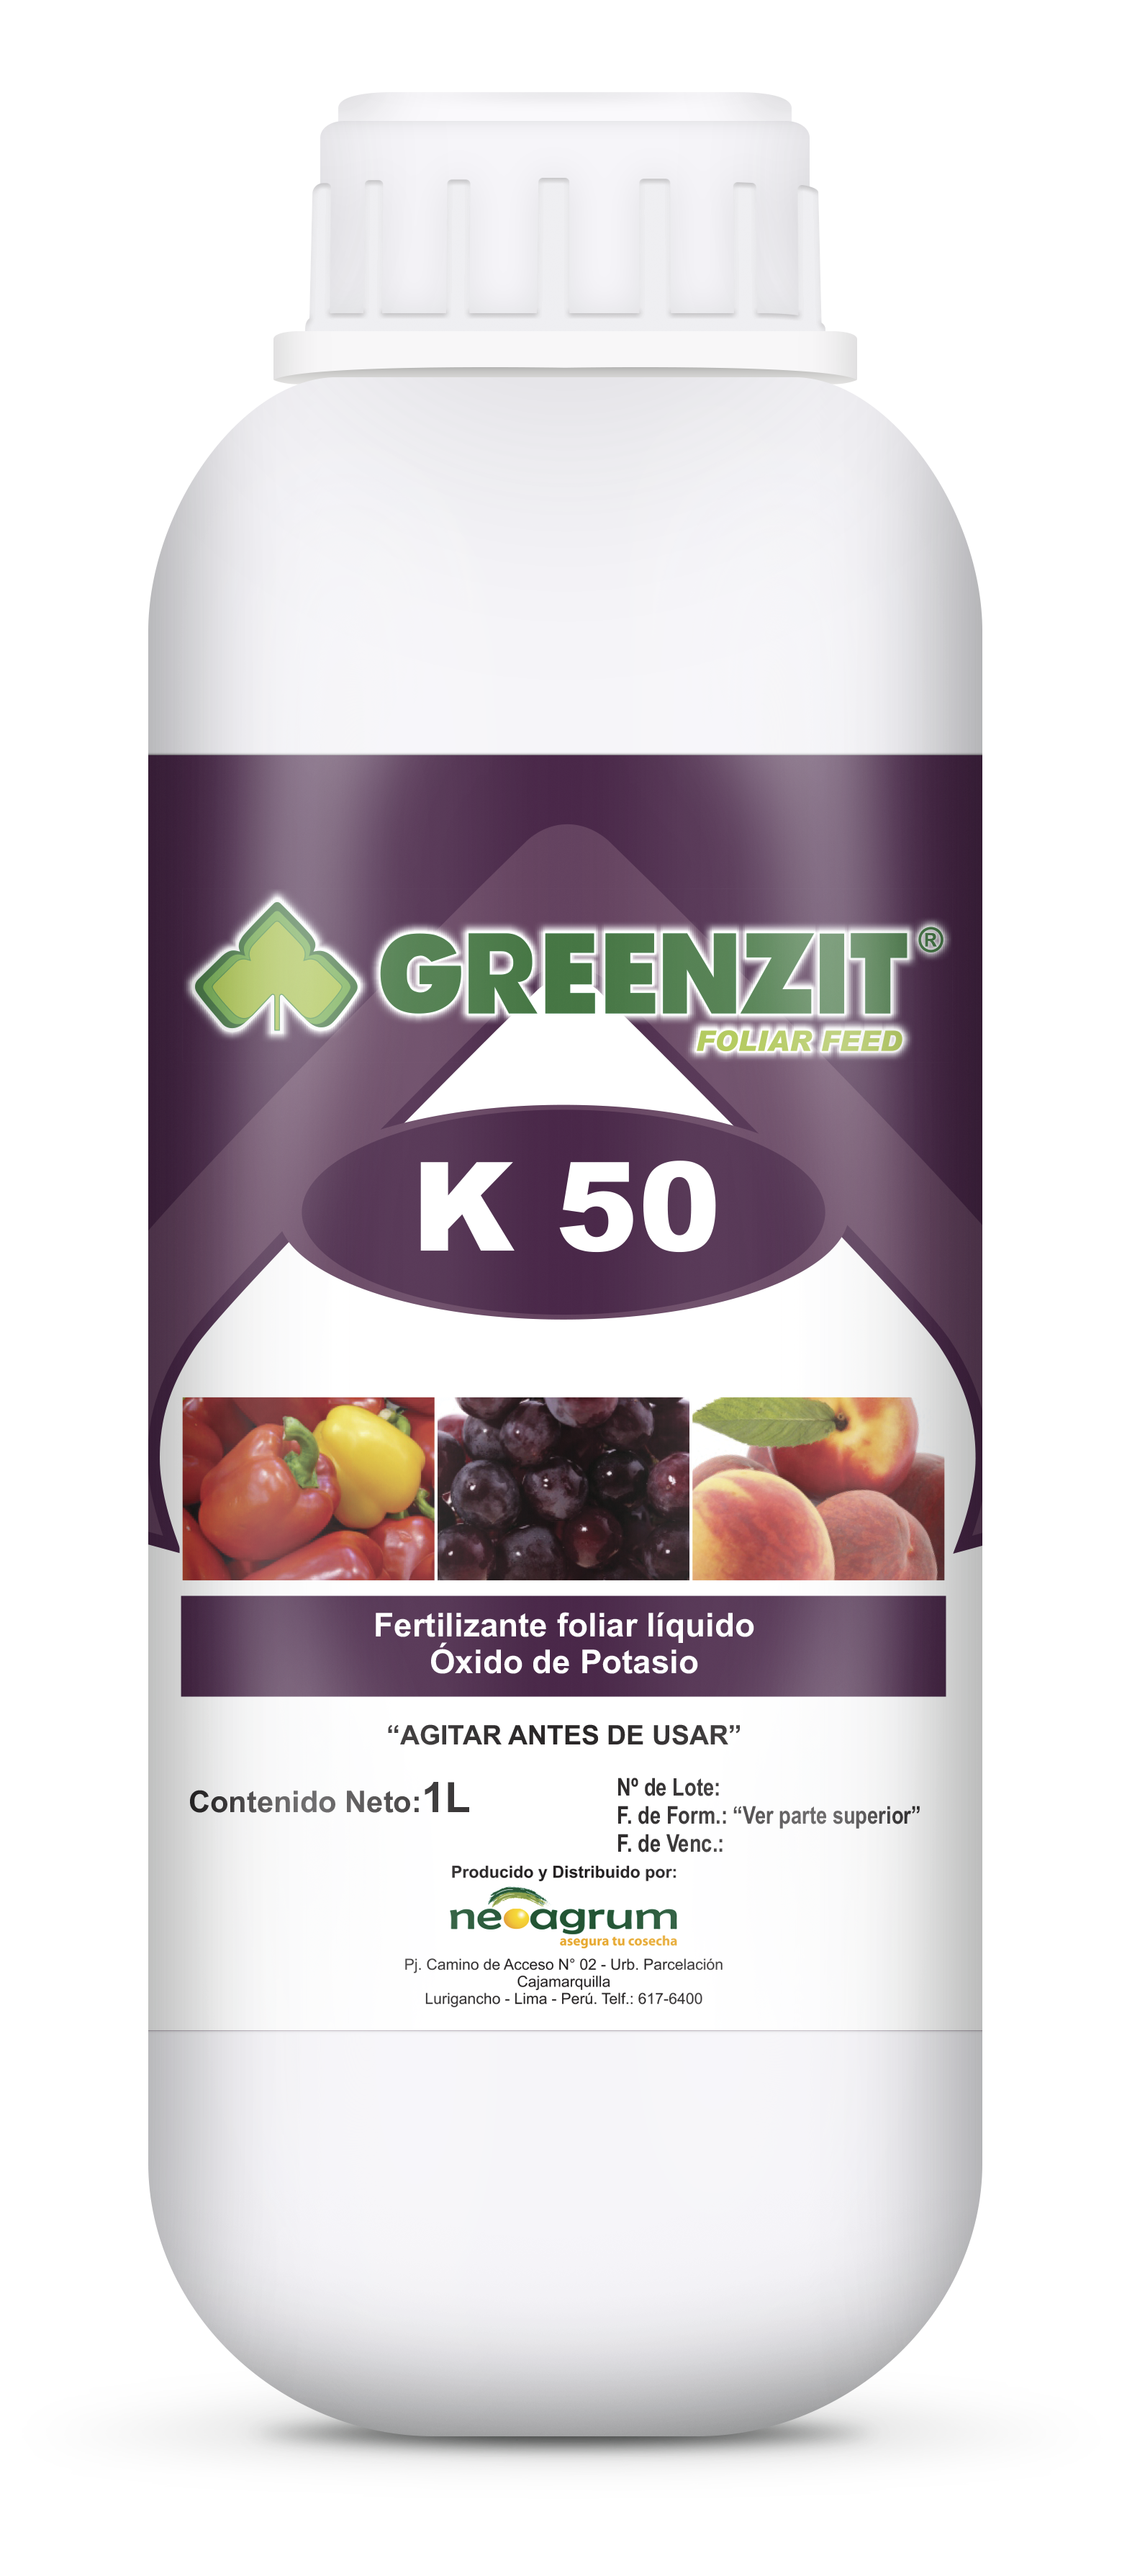 Greenzit K50